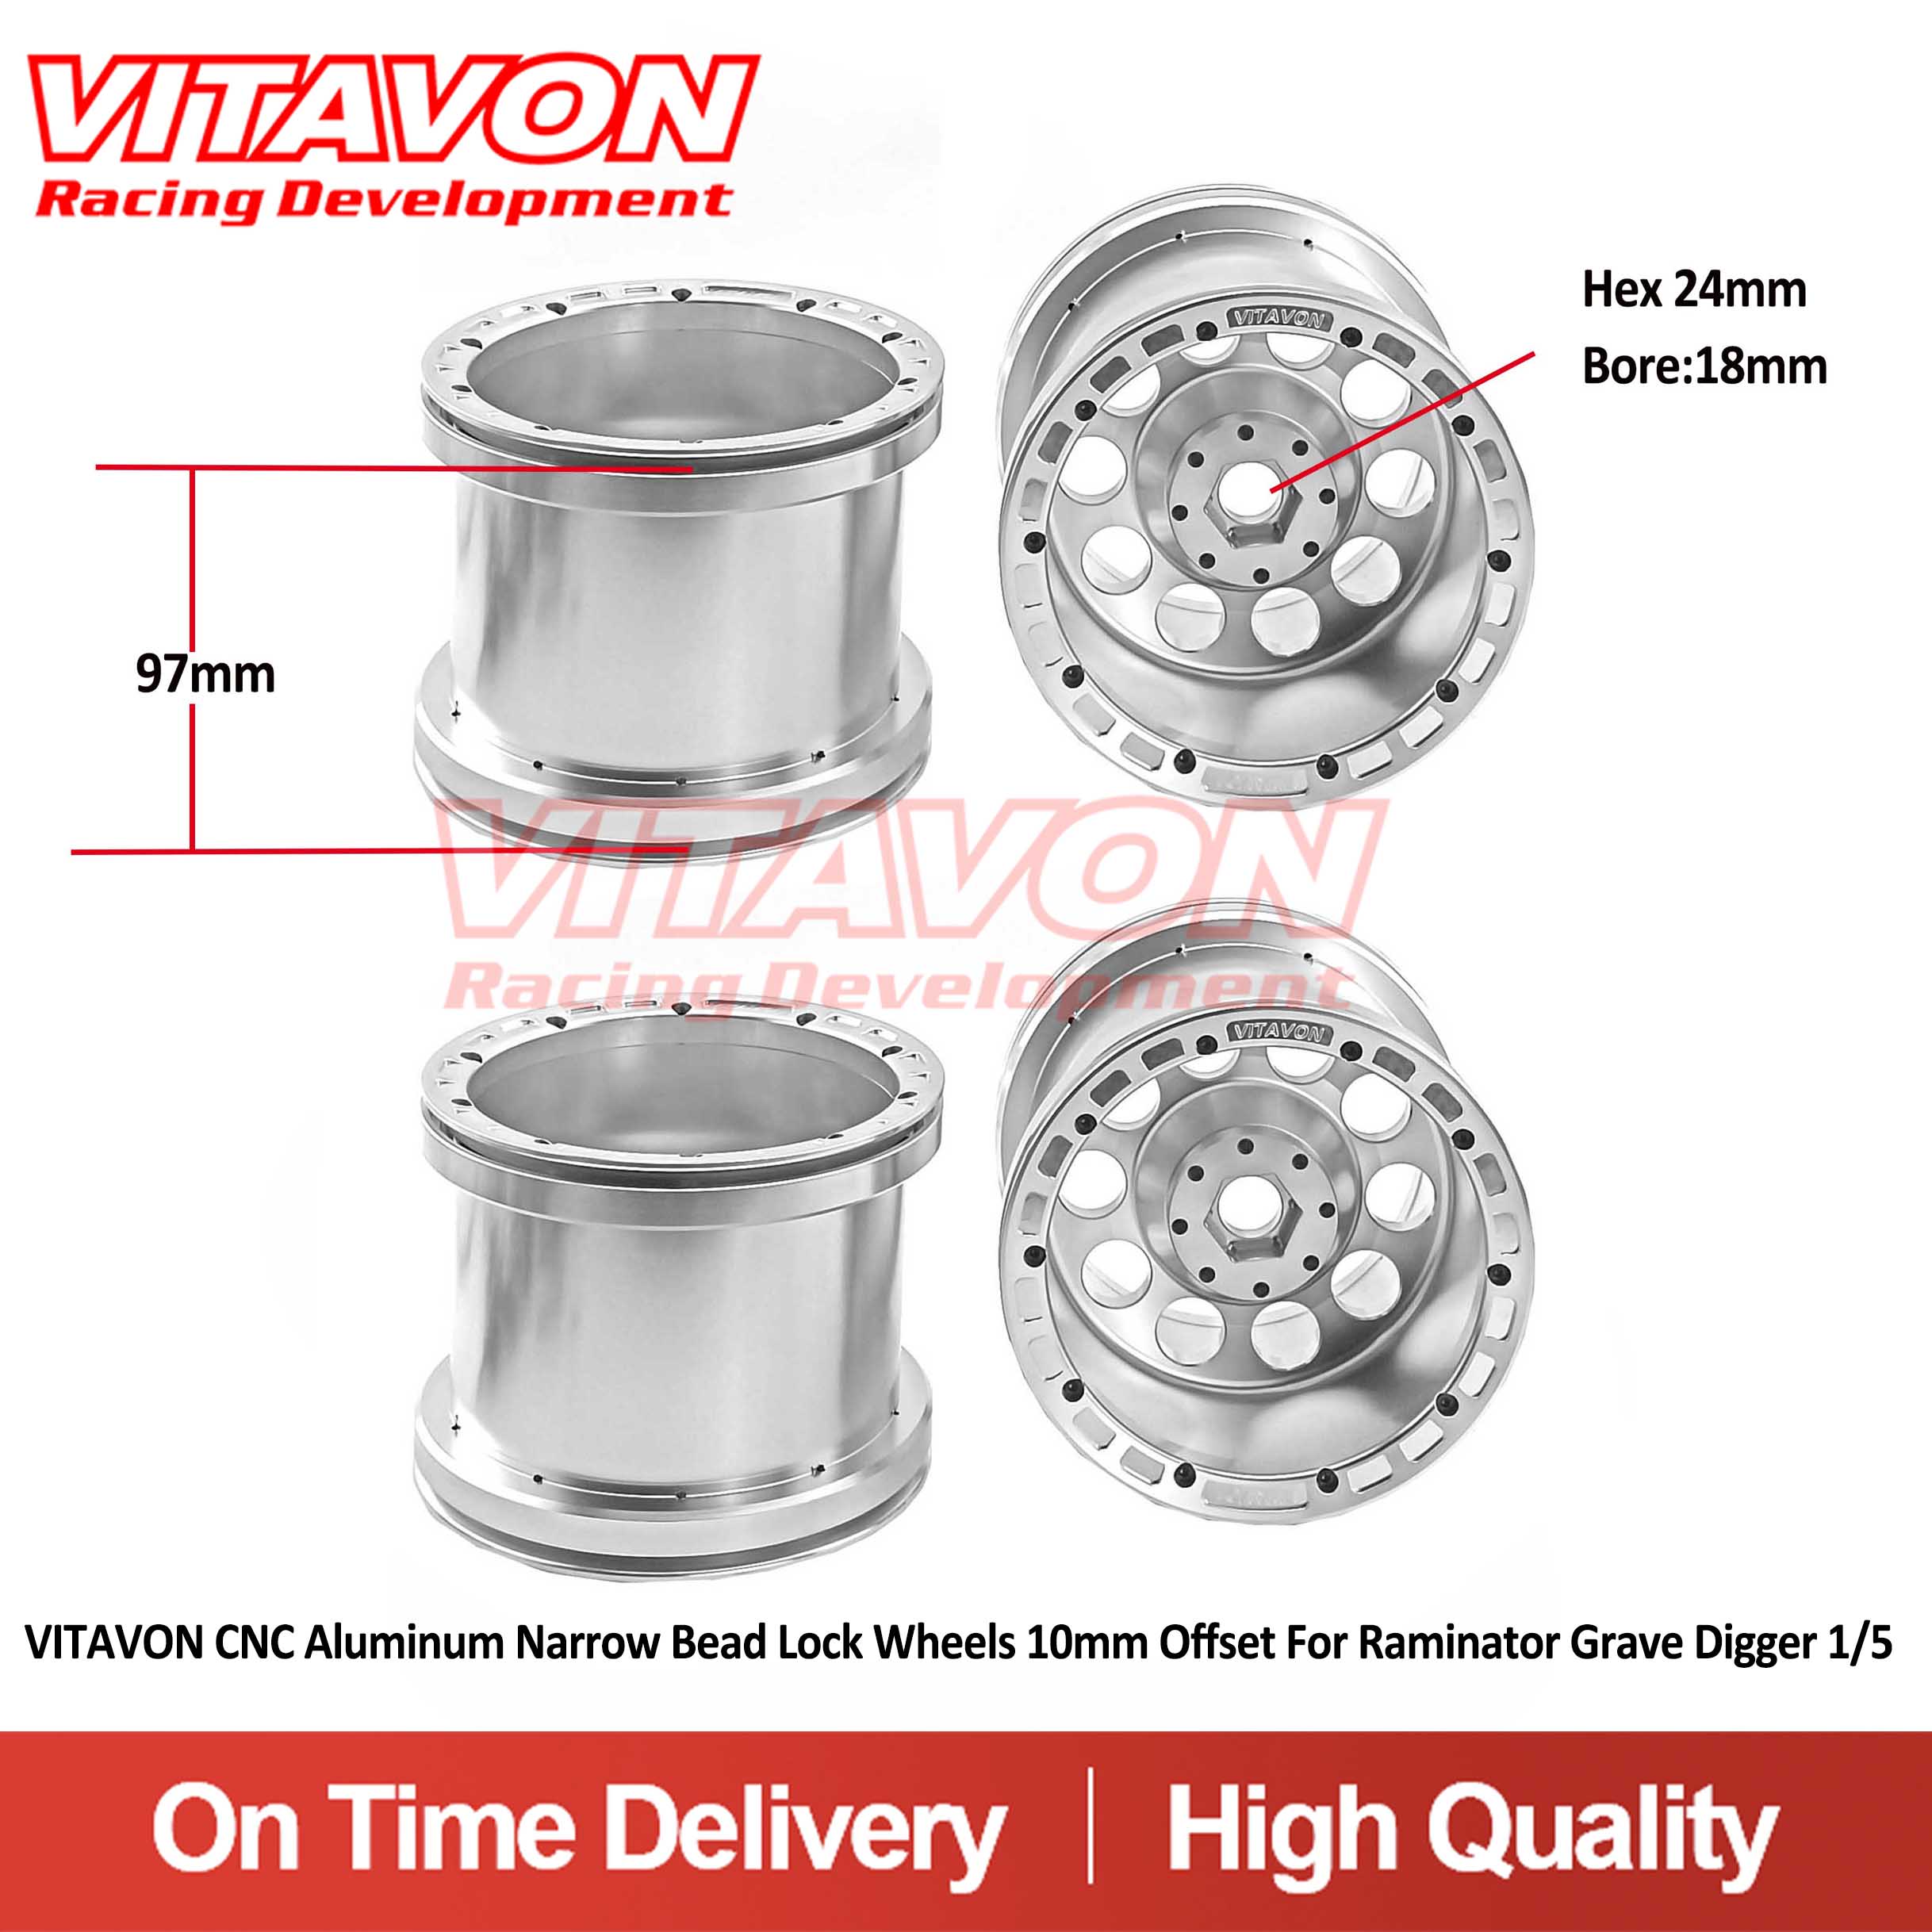 VITAVON CNC Aluminum Narrow Bead Lock Wheels 10mm offset for Raminator Grave Digger 1/5